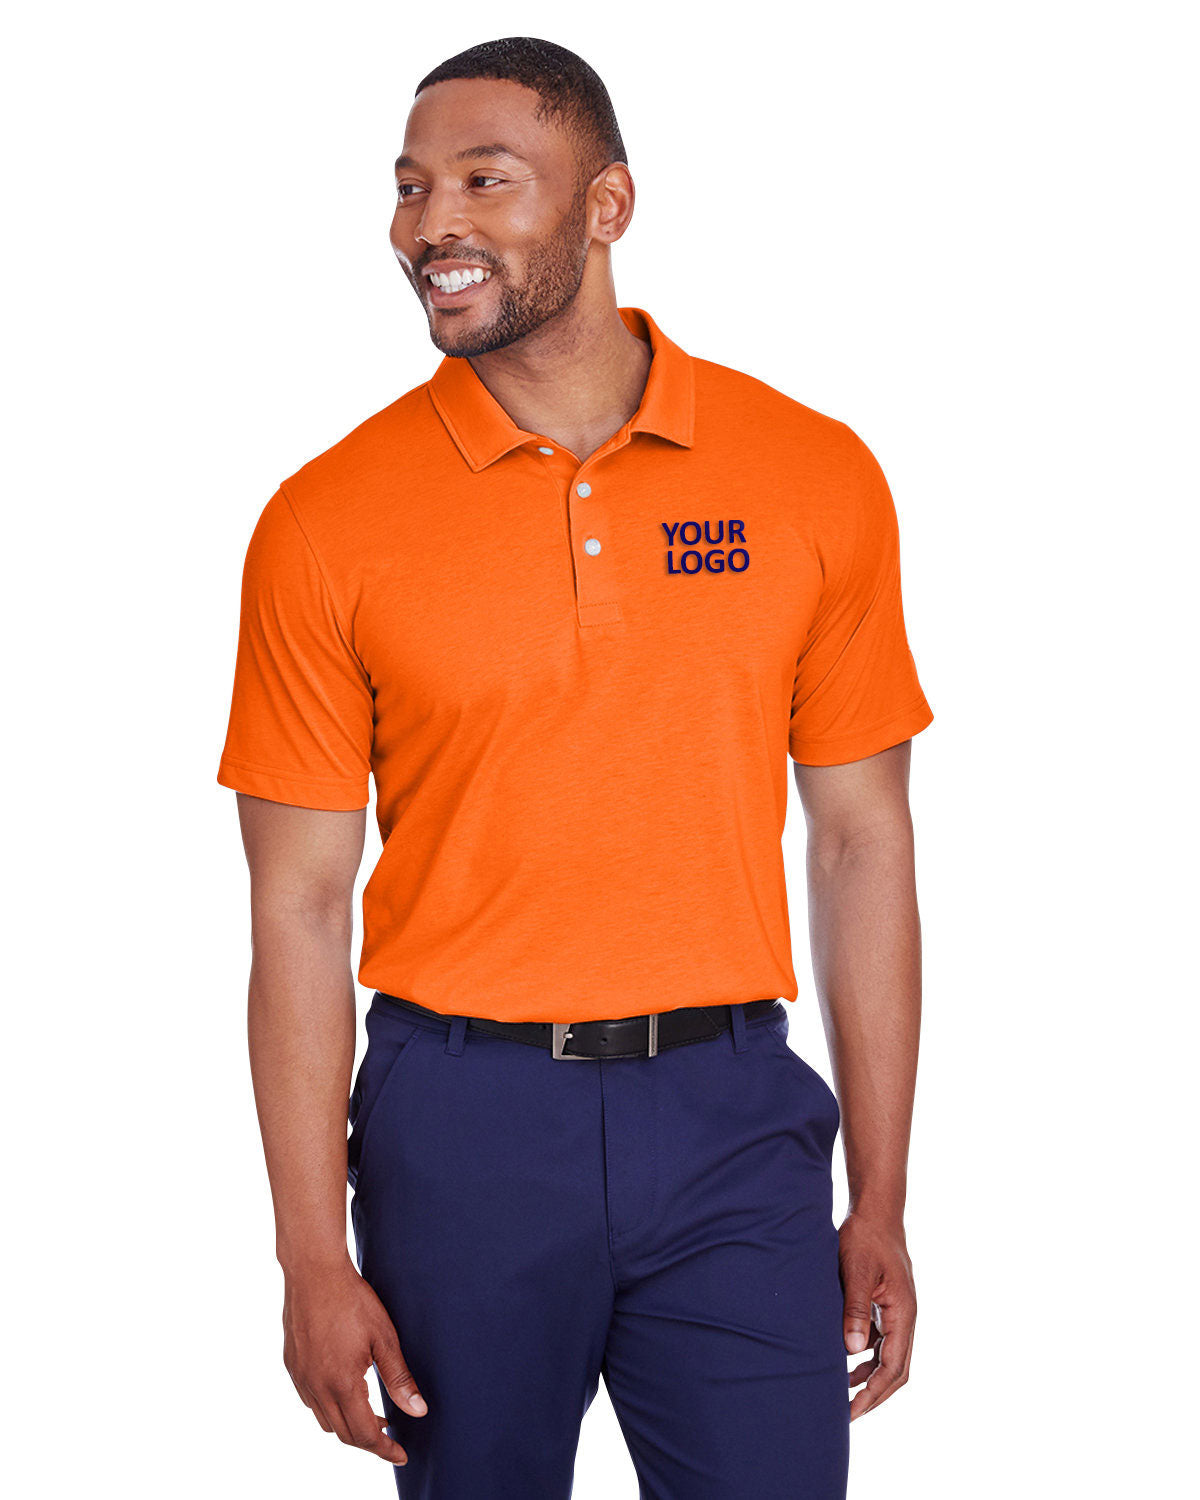 Puma Vibrant Orange 596920 custom dri fit polo shirts